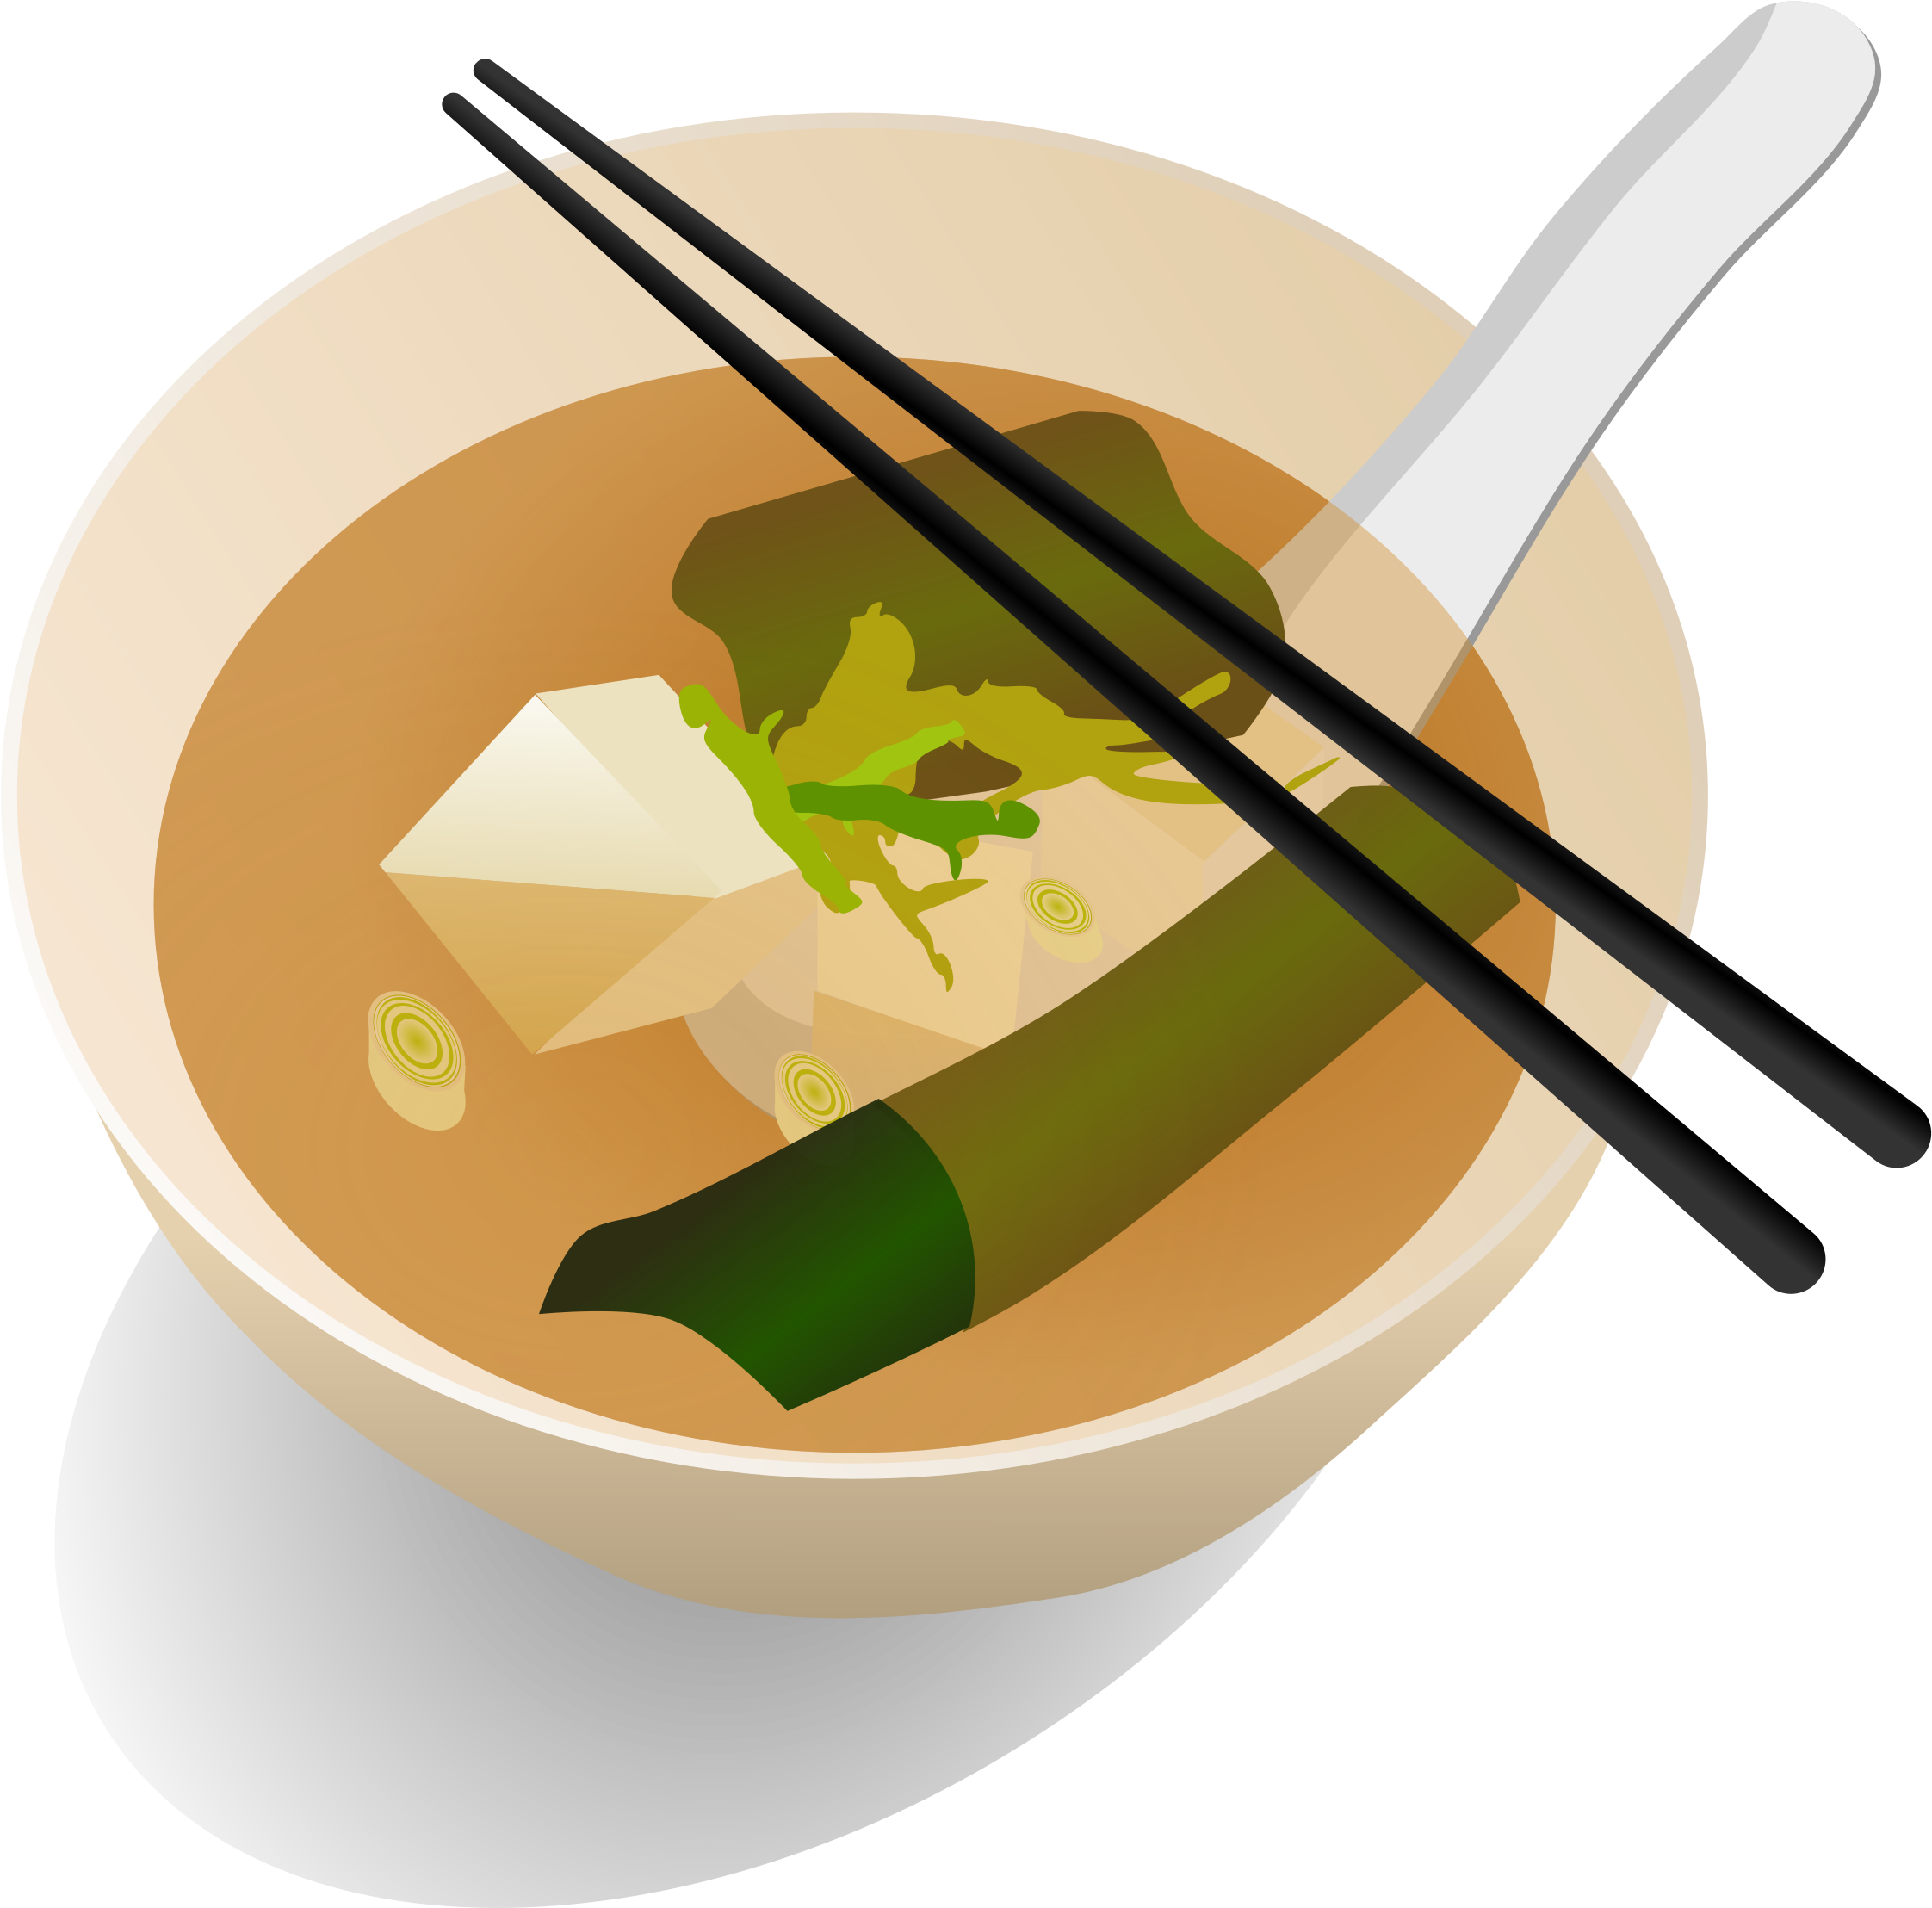 A Bowl Of Soup With Chopsticks